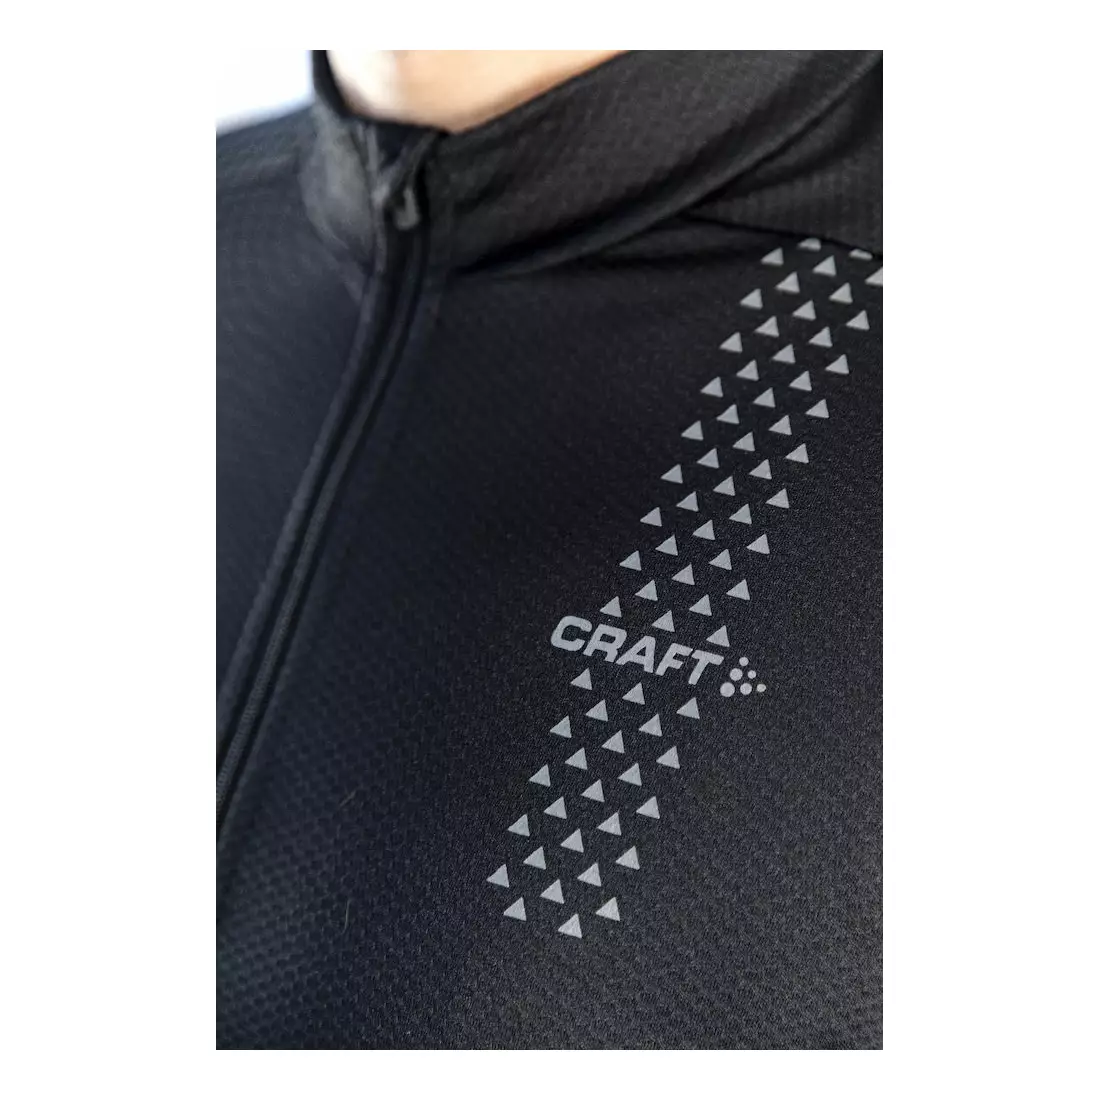 CRAFT RISE men's cycling jersey, black 1906097-999000